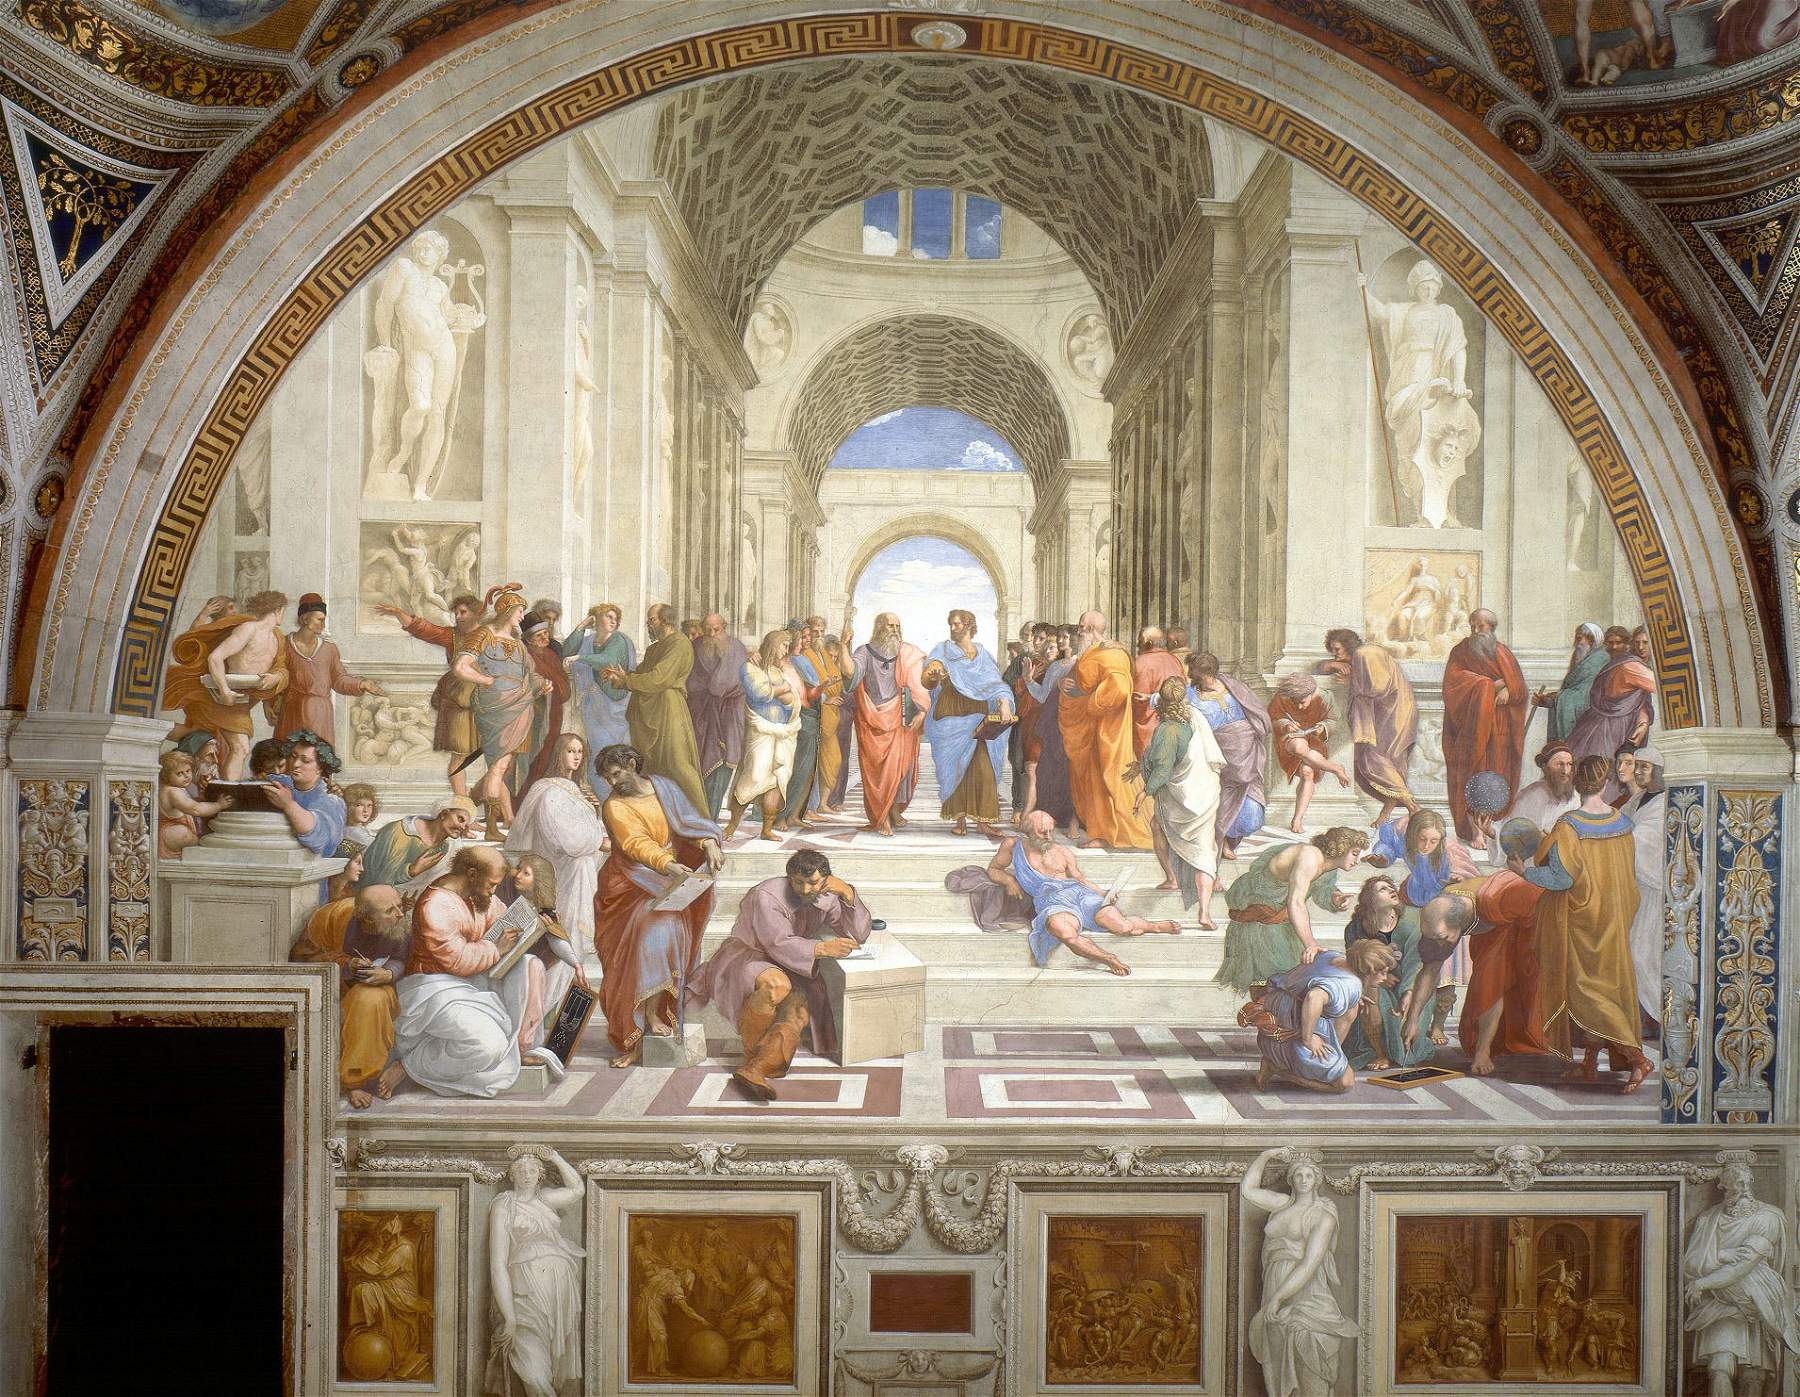 Obras de Rafael en Roma: cinco lugares que ver en dos días